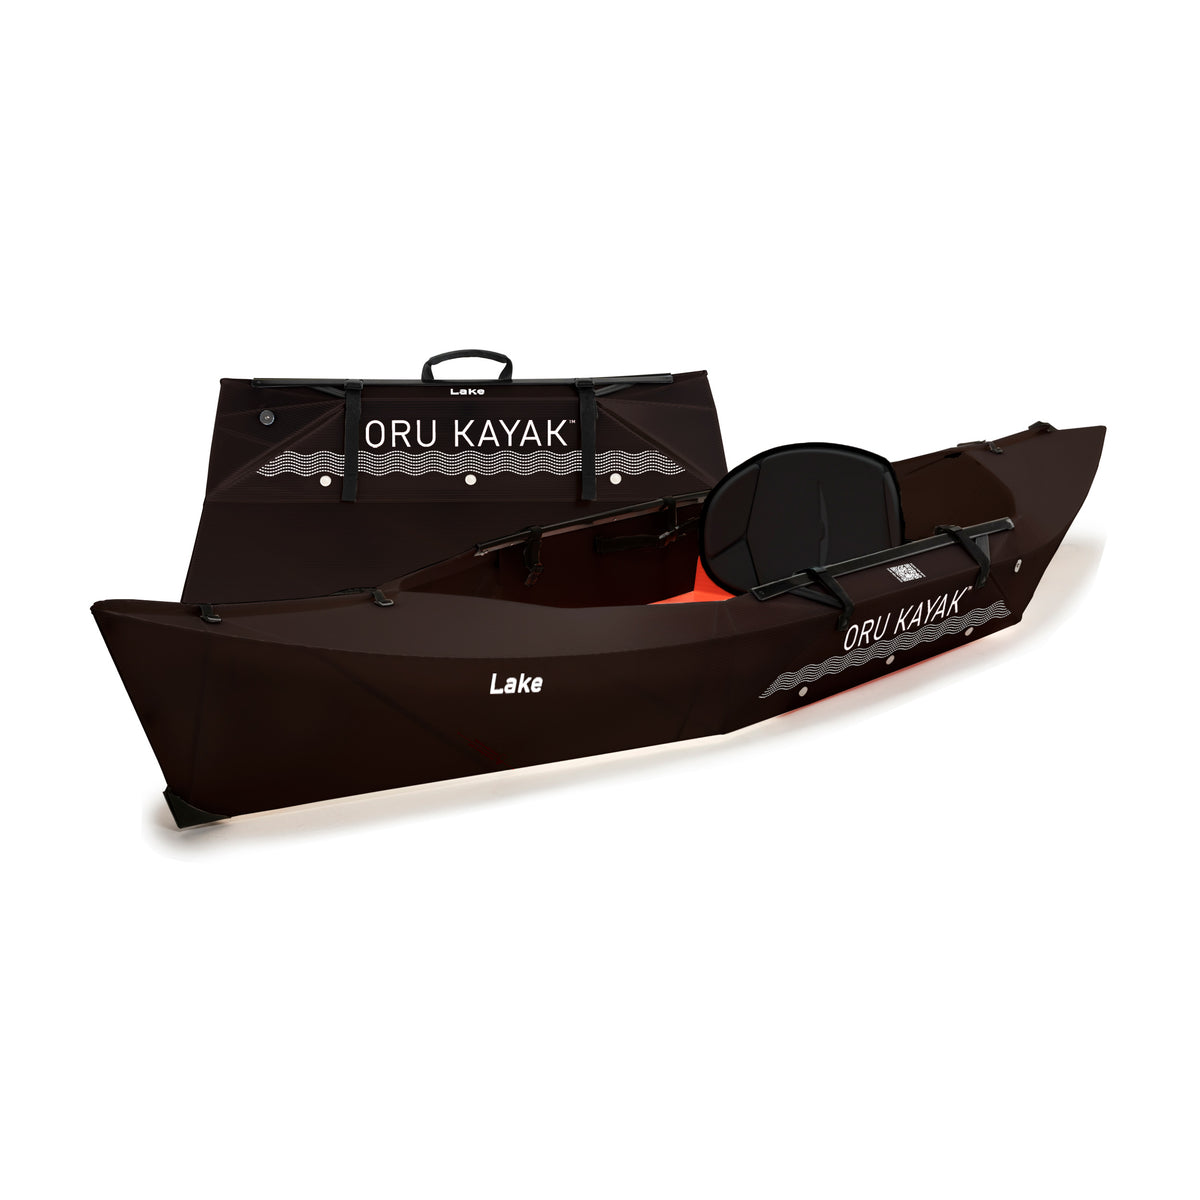 Return Policy - Love Your Boat Guarantee – Oru Kayak Canada